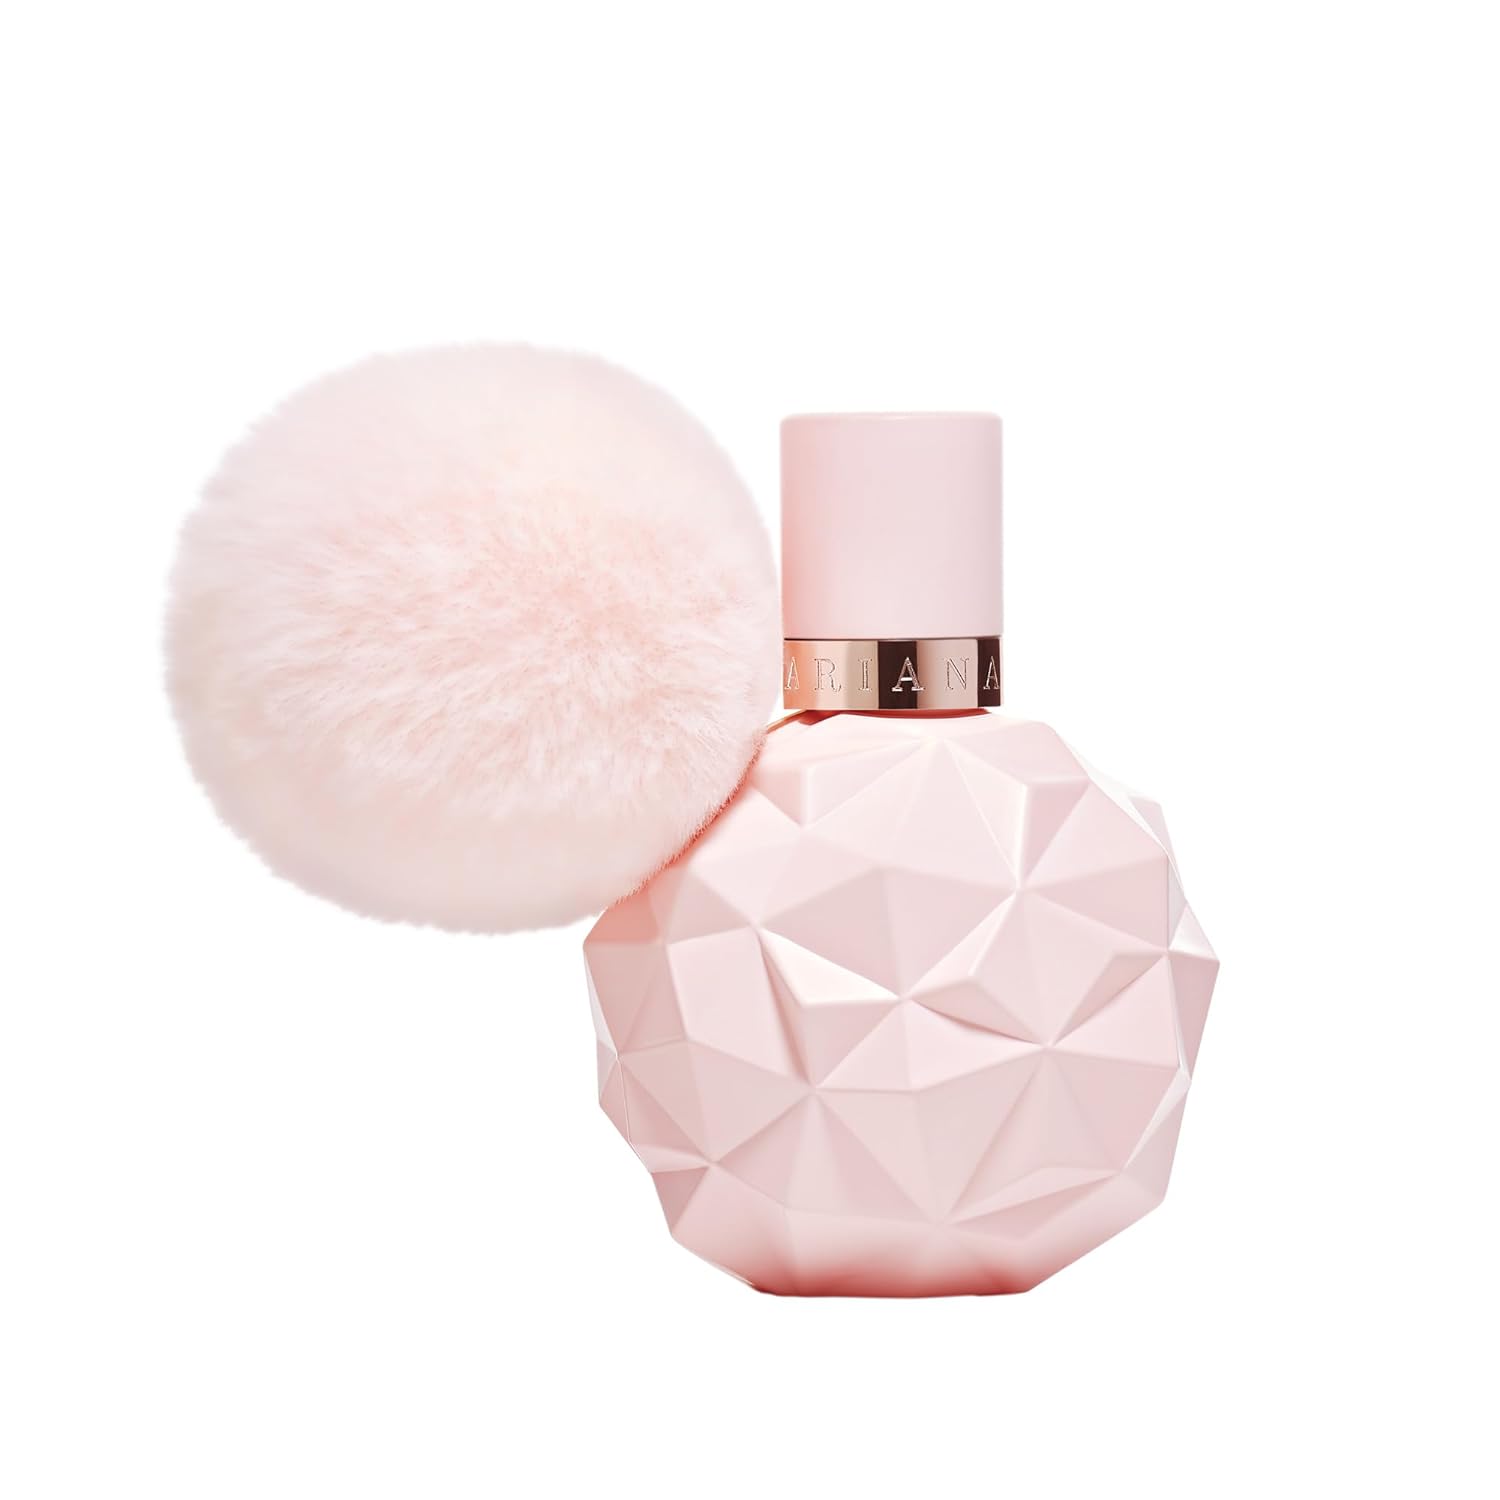 Perfume para Mujer Ariana Grande Sweet Like Candy, 100ML